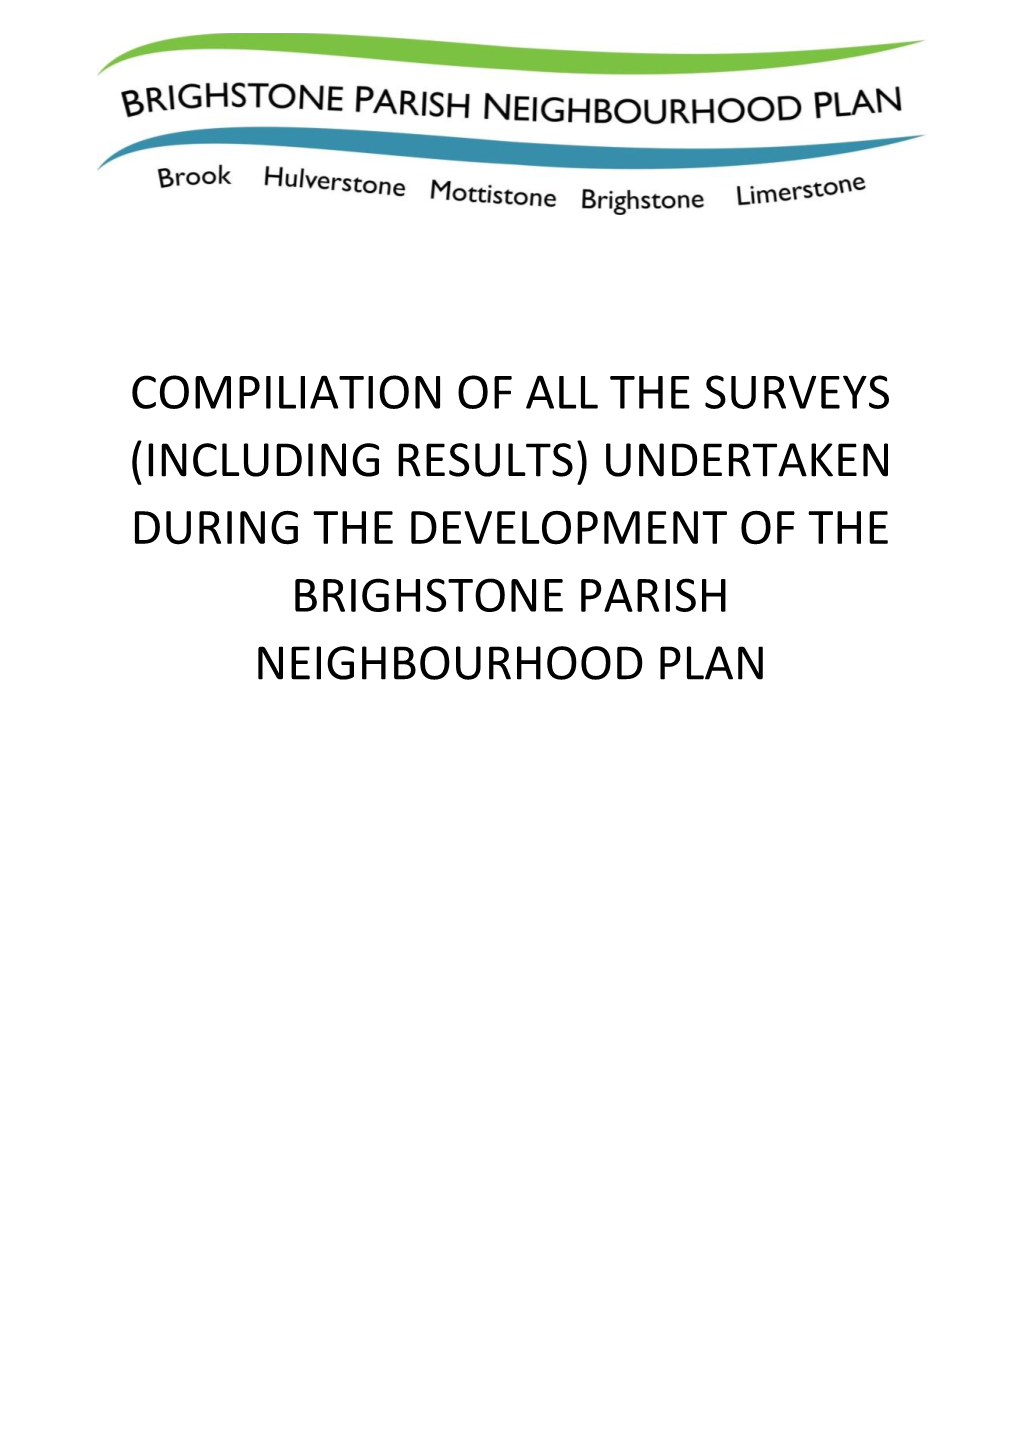 Undertaken During the Development of the Brighstone Parish Neighbourhood Plan